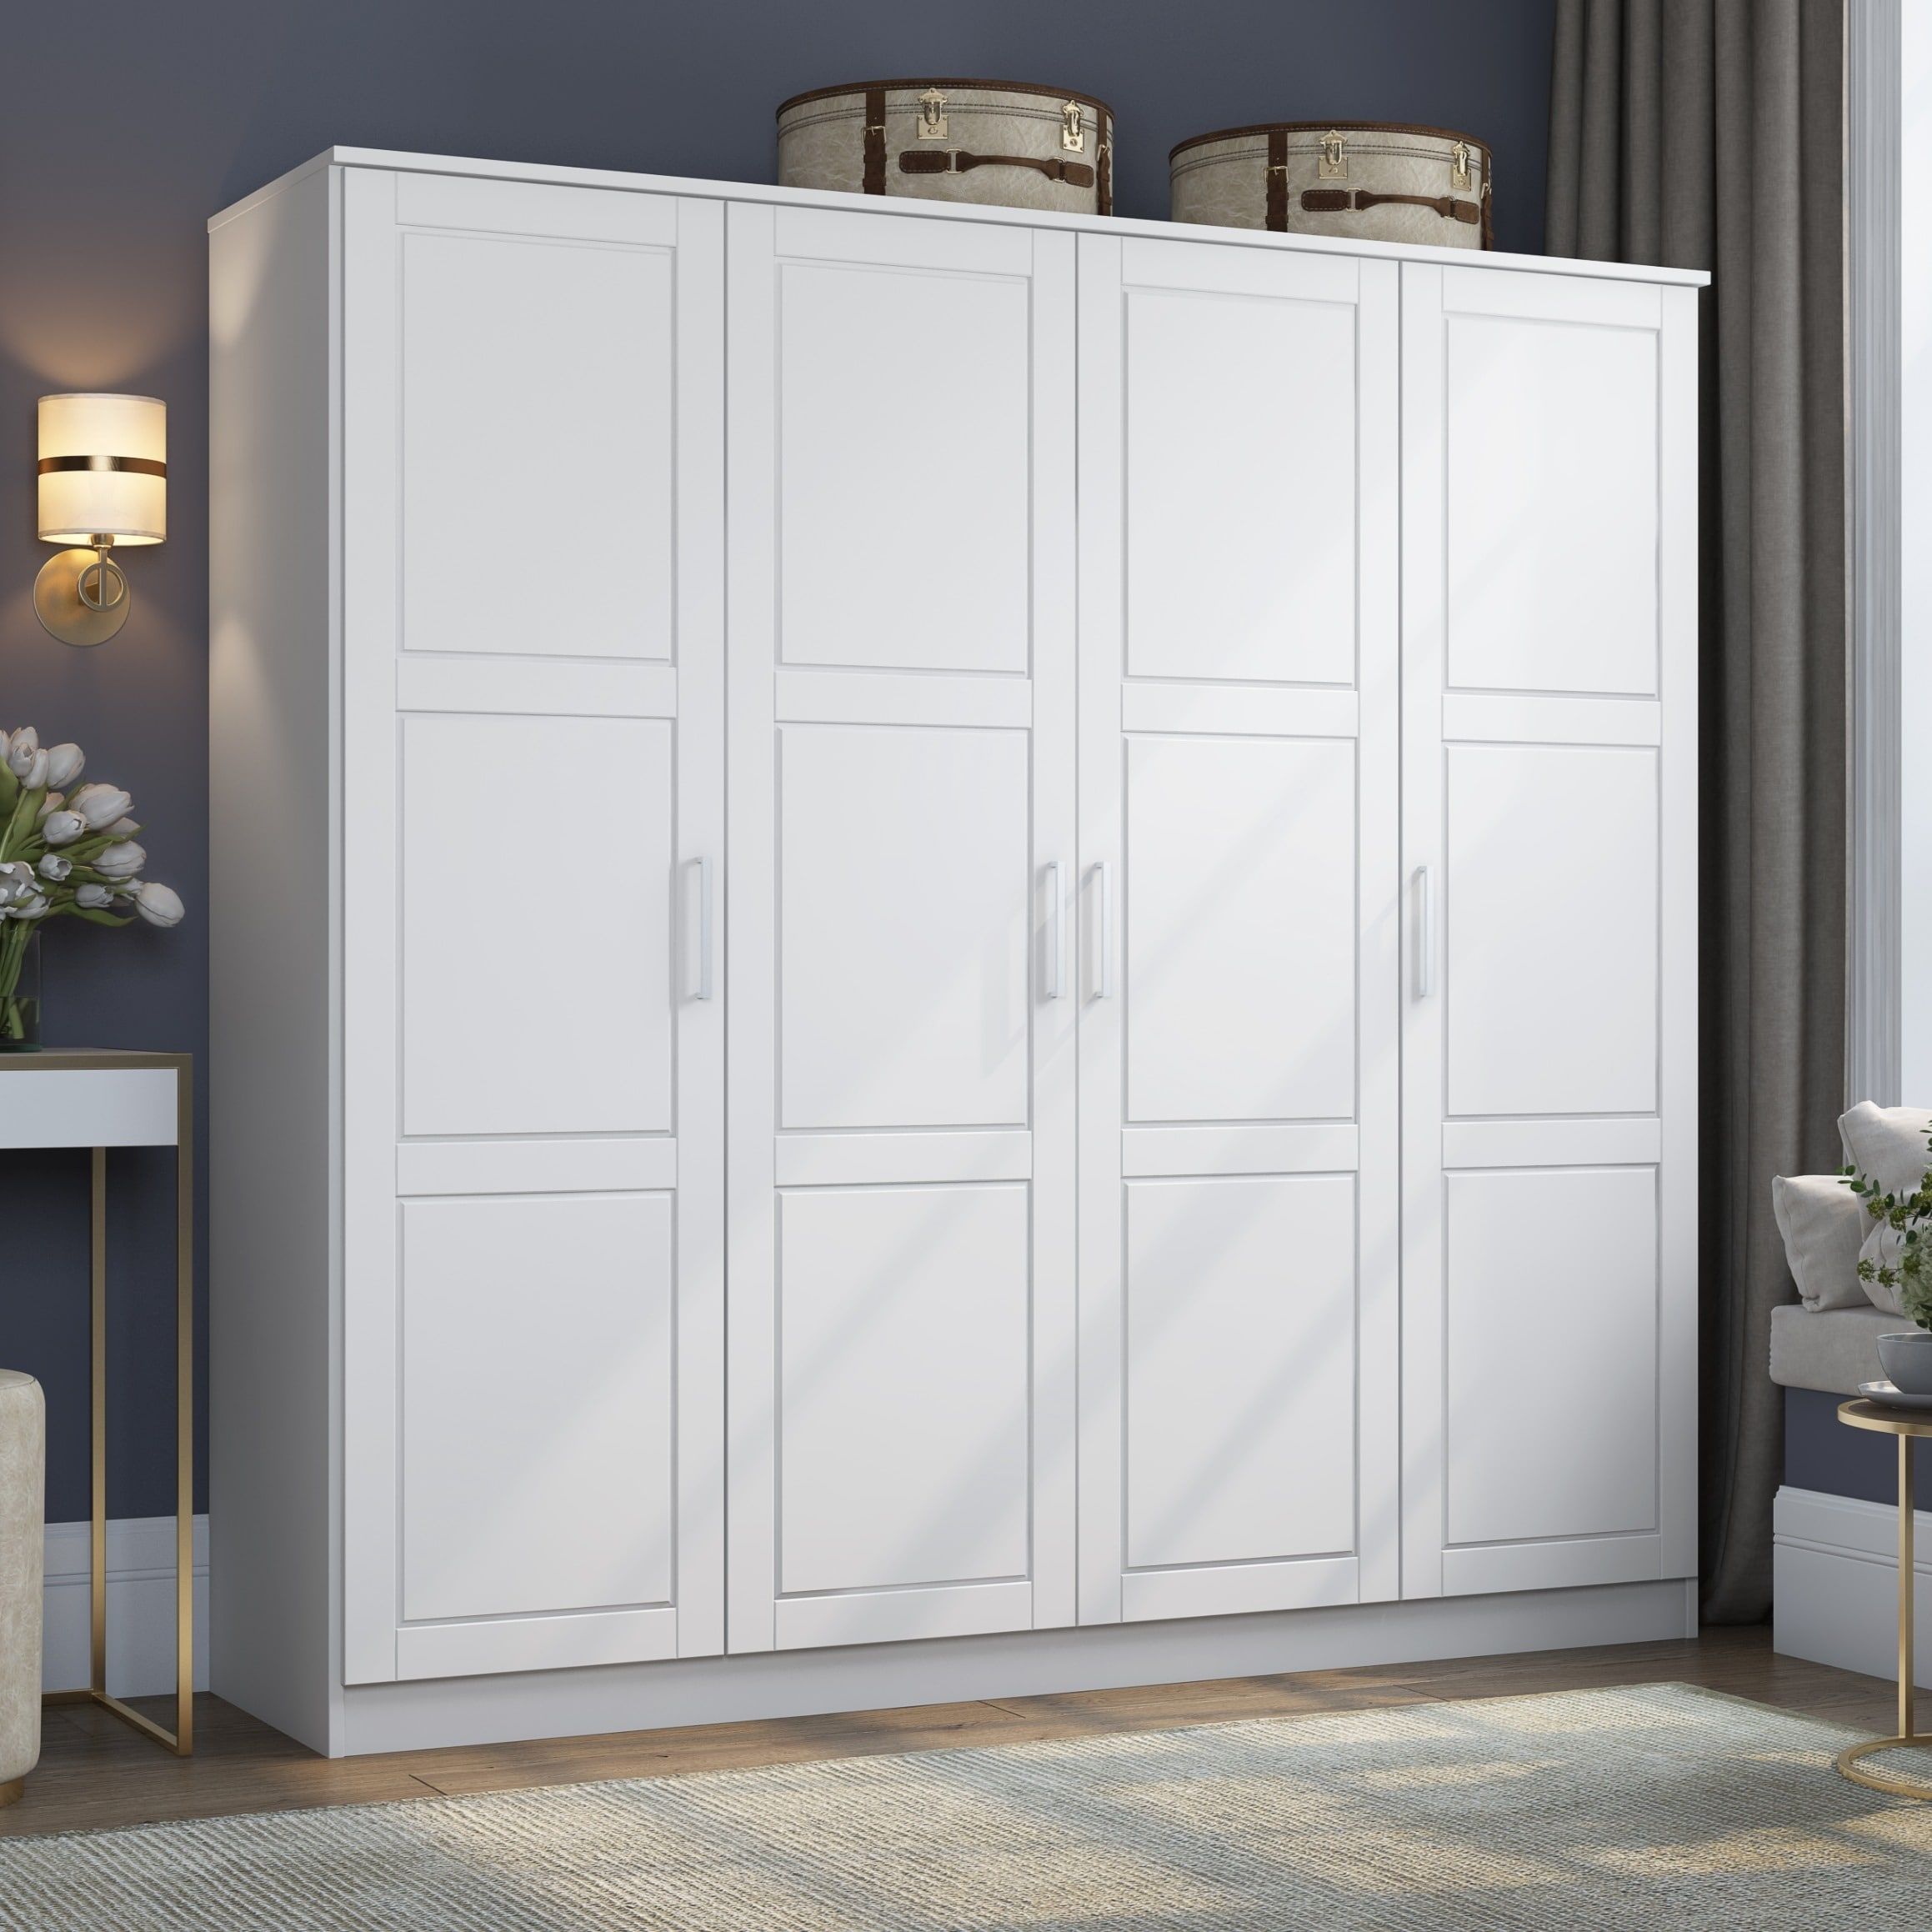 100% Solid Wood Cosmo 4 Door Wardrobe With Solid Wood Or Mirrored Doors –  On Sale – Bed Bath & Beyond – 37717187 Inside Wardrobes 4 Doors (View 3 of 15)